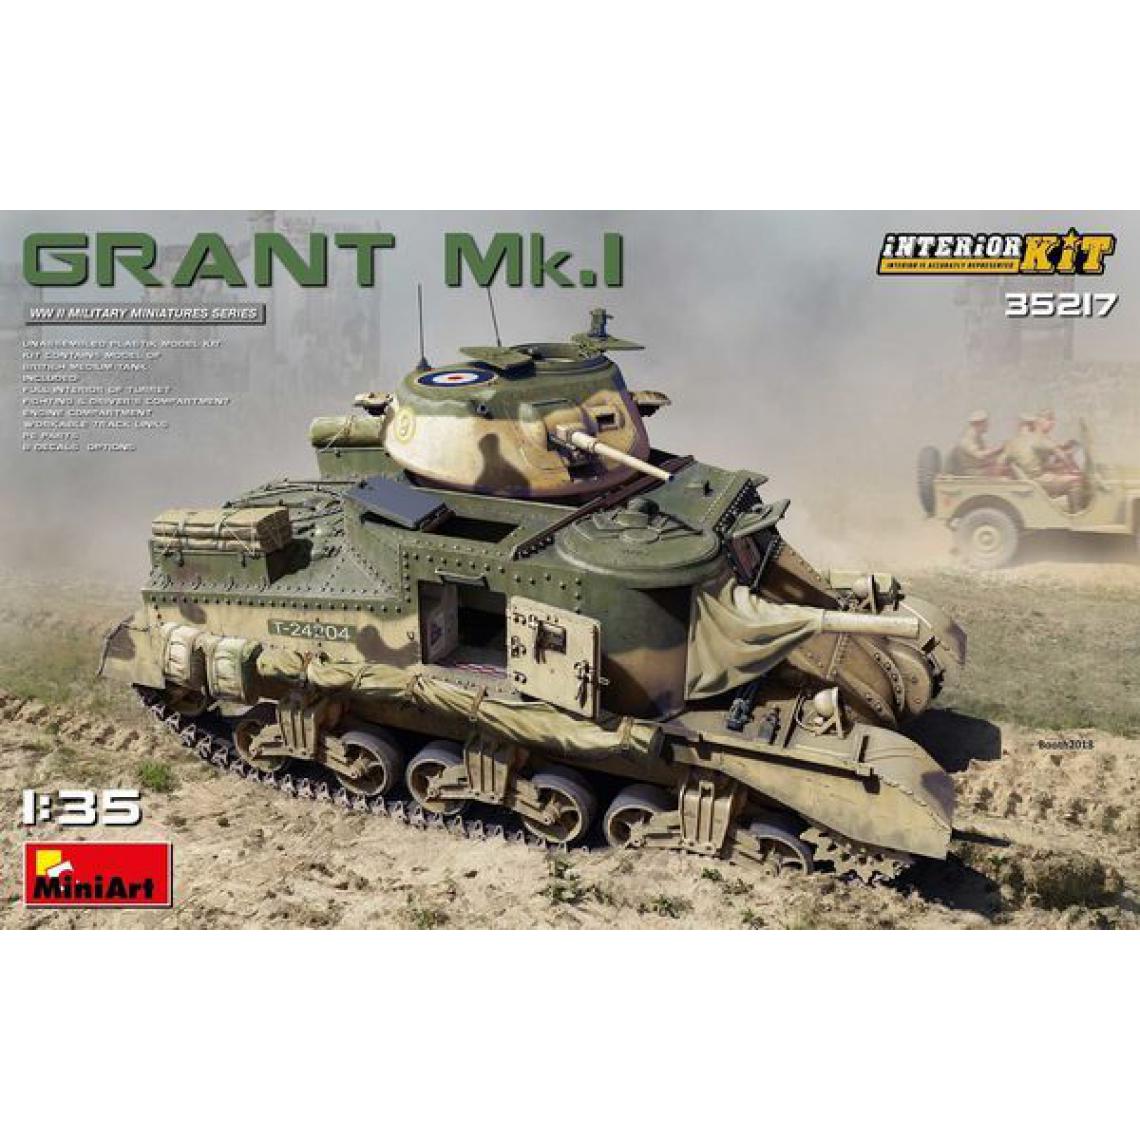 MiniArt - Grant Mk.I Interior Kit - 1:35e - MiniArt - Accessoires et pièces